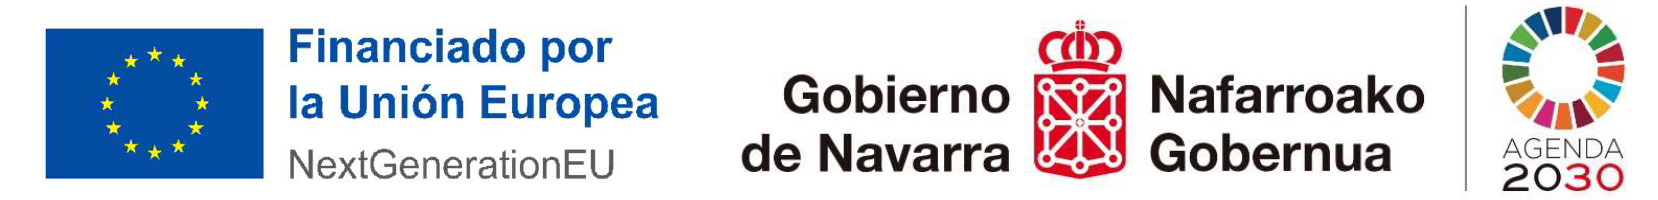 Turismo de Navarra